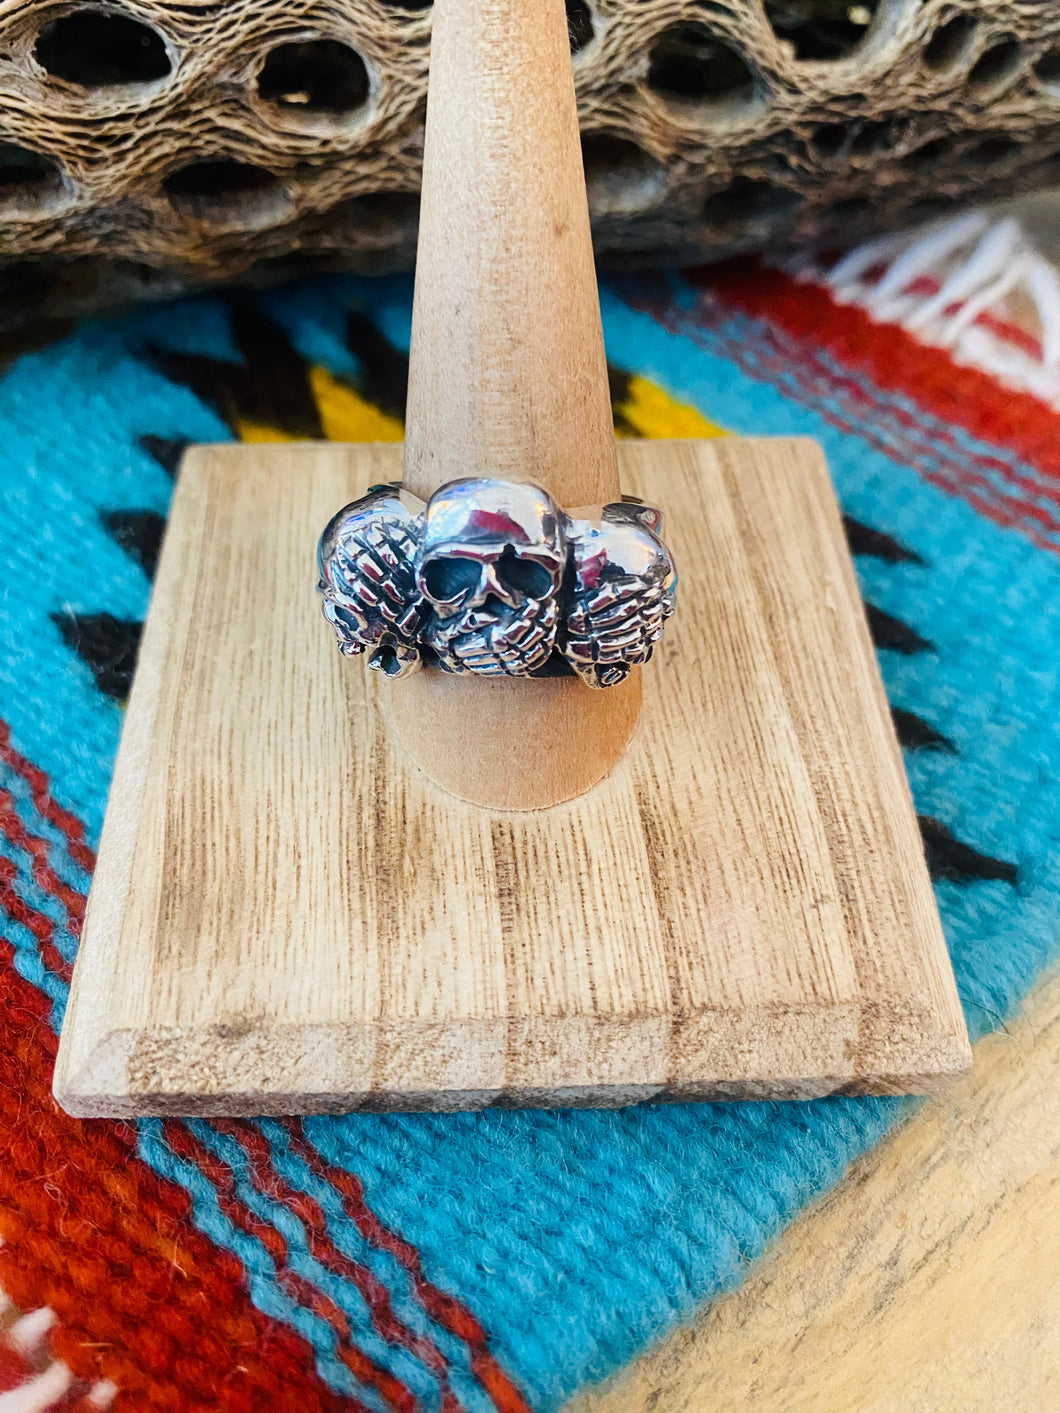 Handmade Sterling Silver Skull Ring Size 9.25